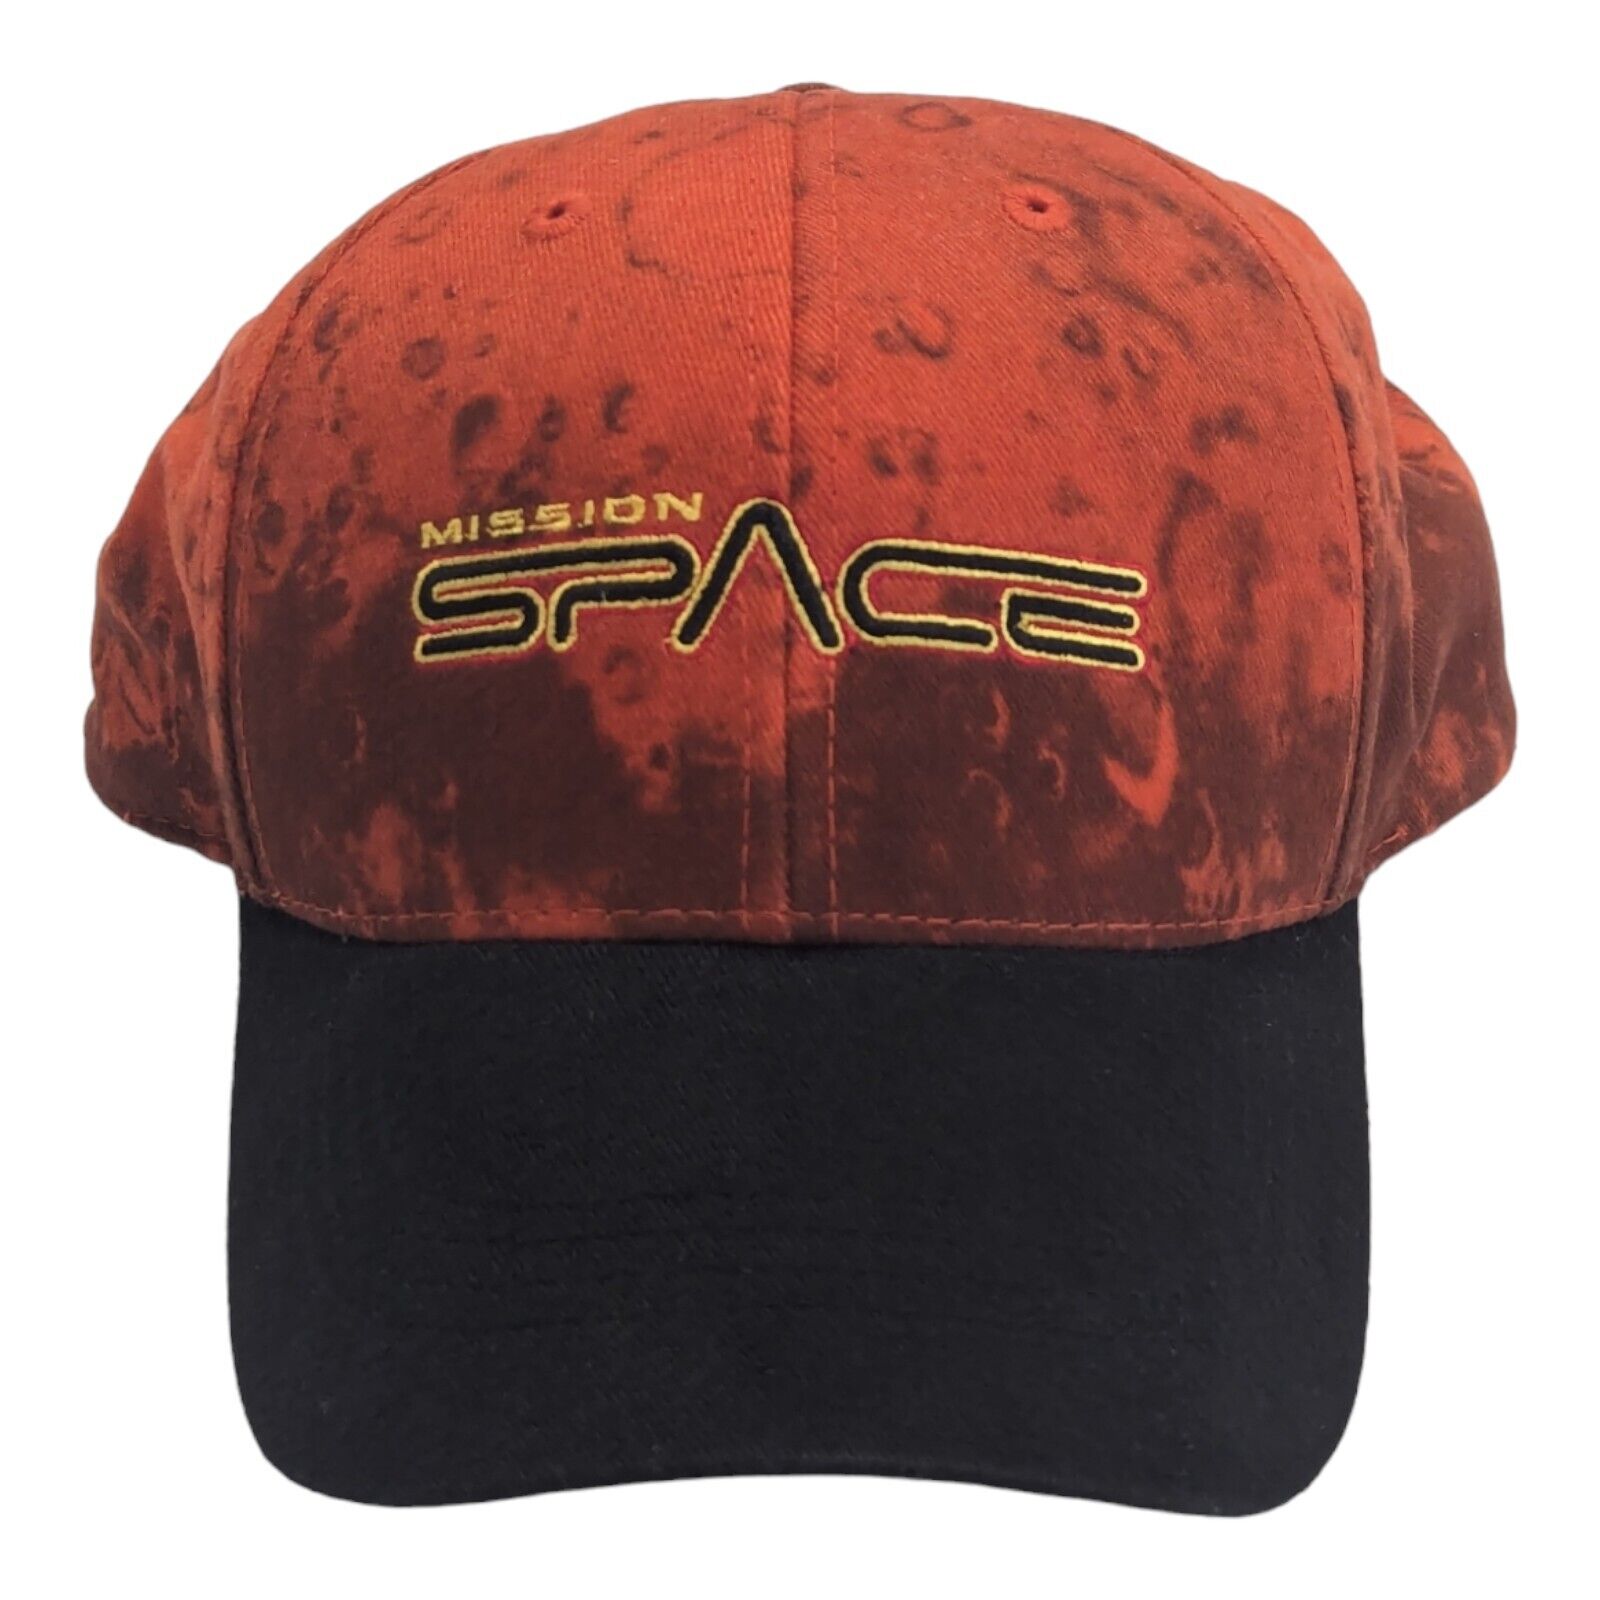 Vintage Disney World Epcot Mission Space Mars Baseball Hat Cap